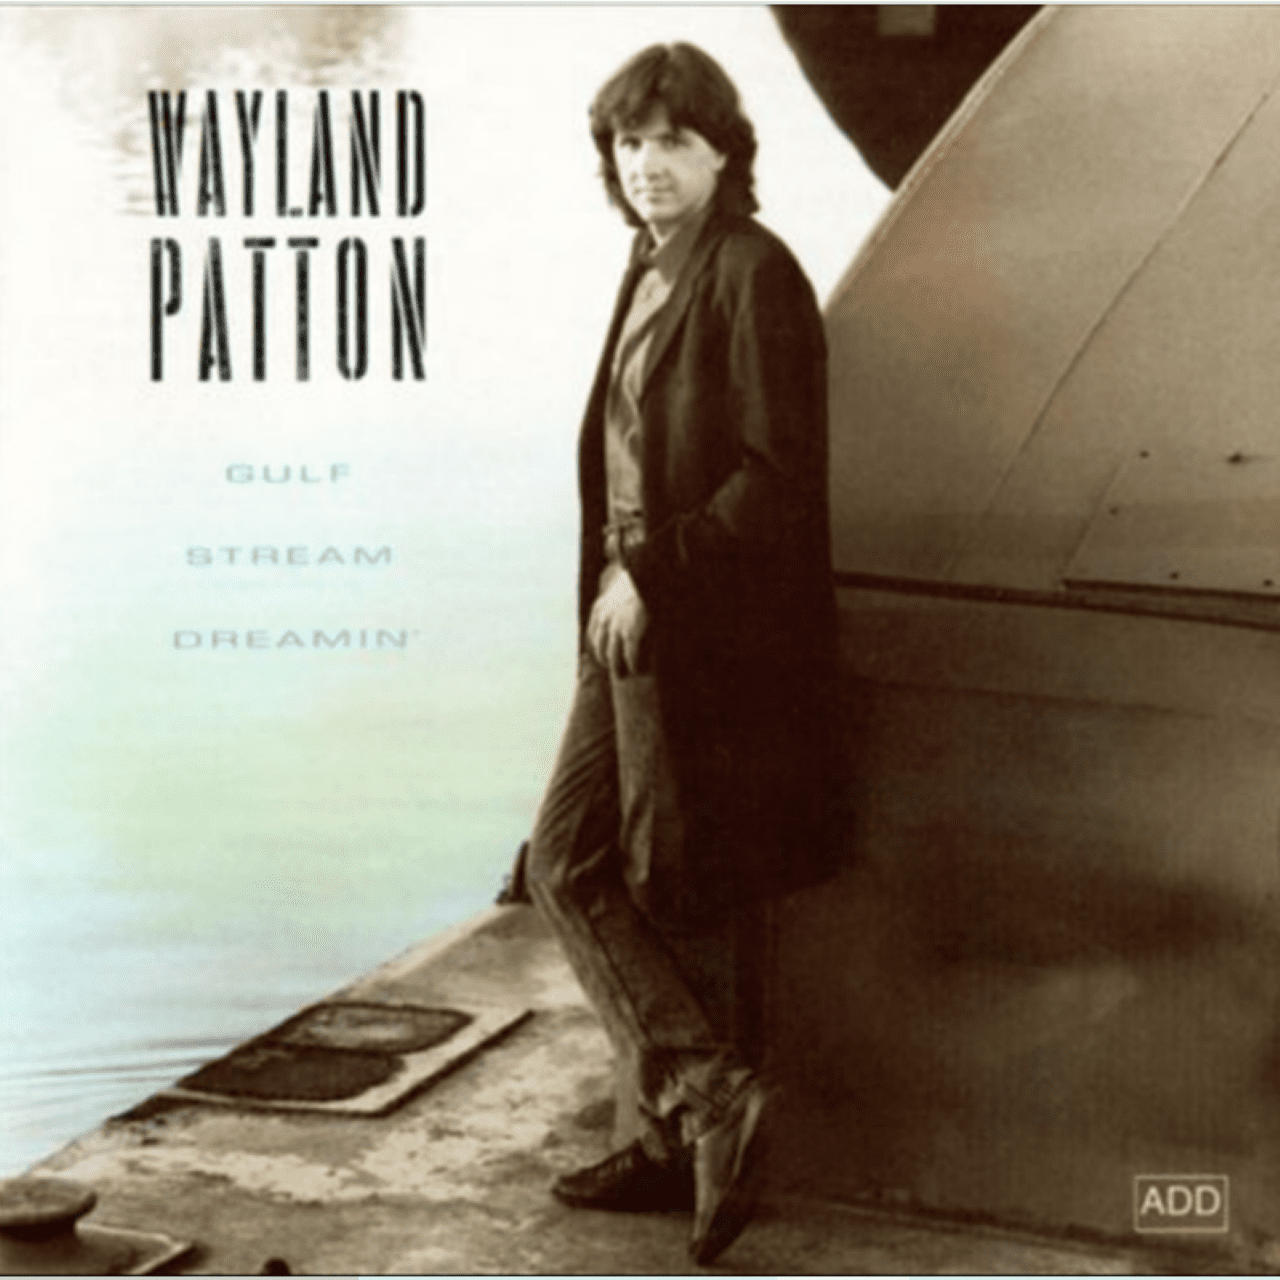 Wayland Patton – Gulf Stream Dreamin cover album